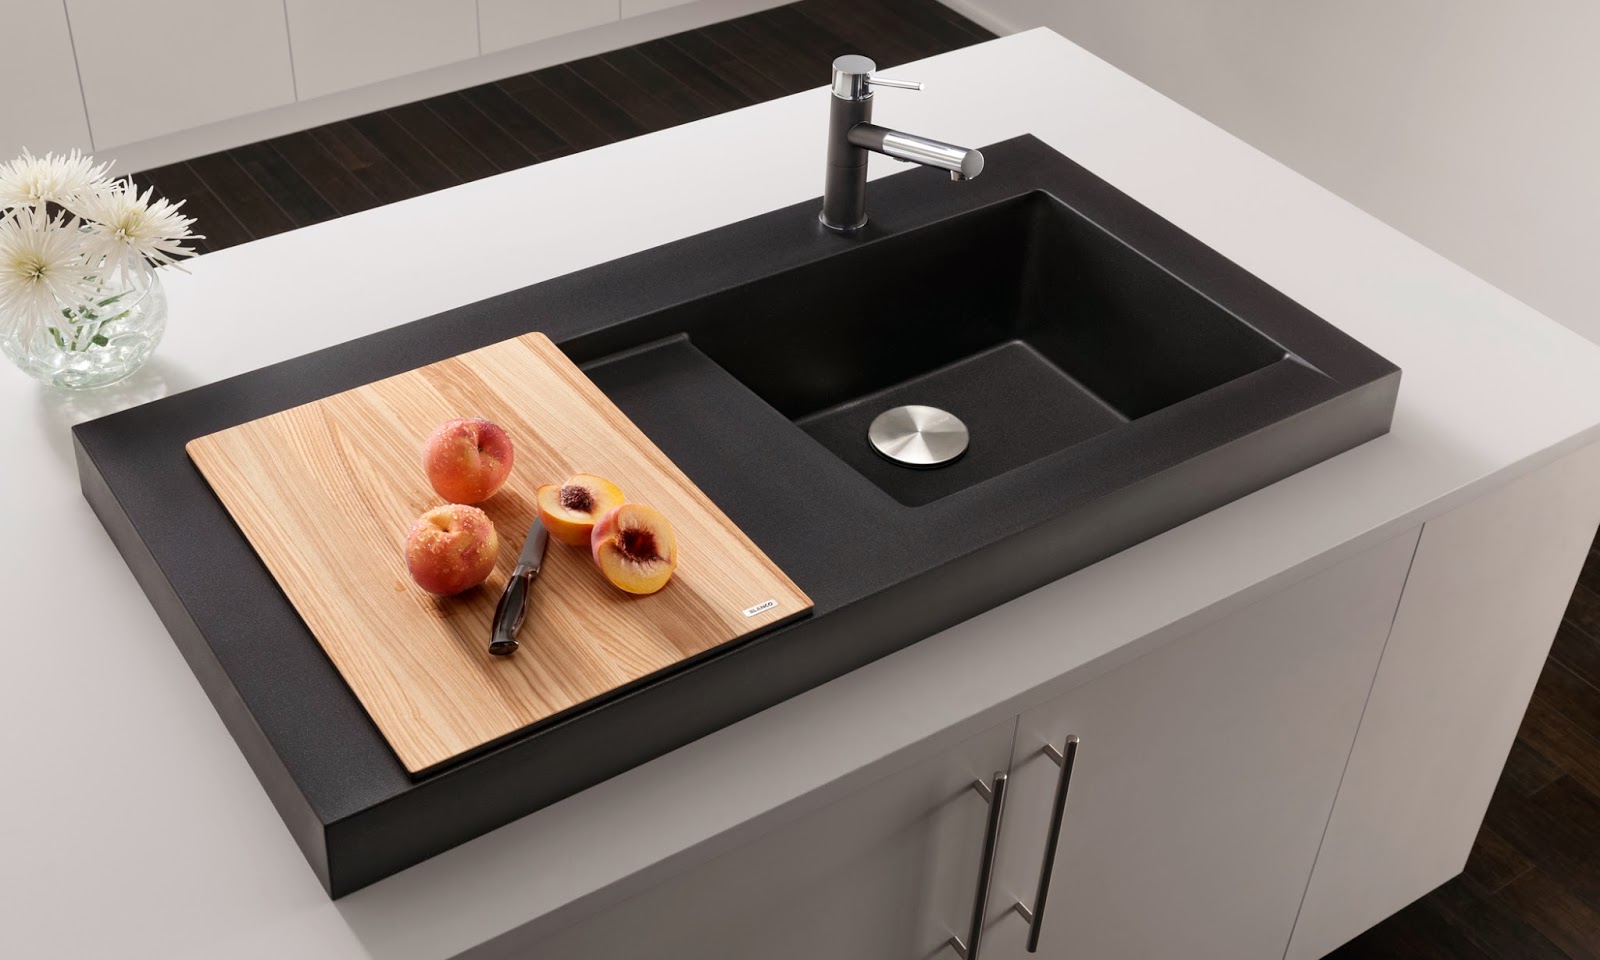 blanco america silgranit kitchen sinks